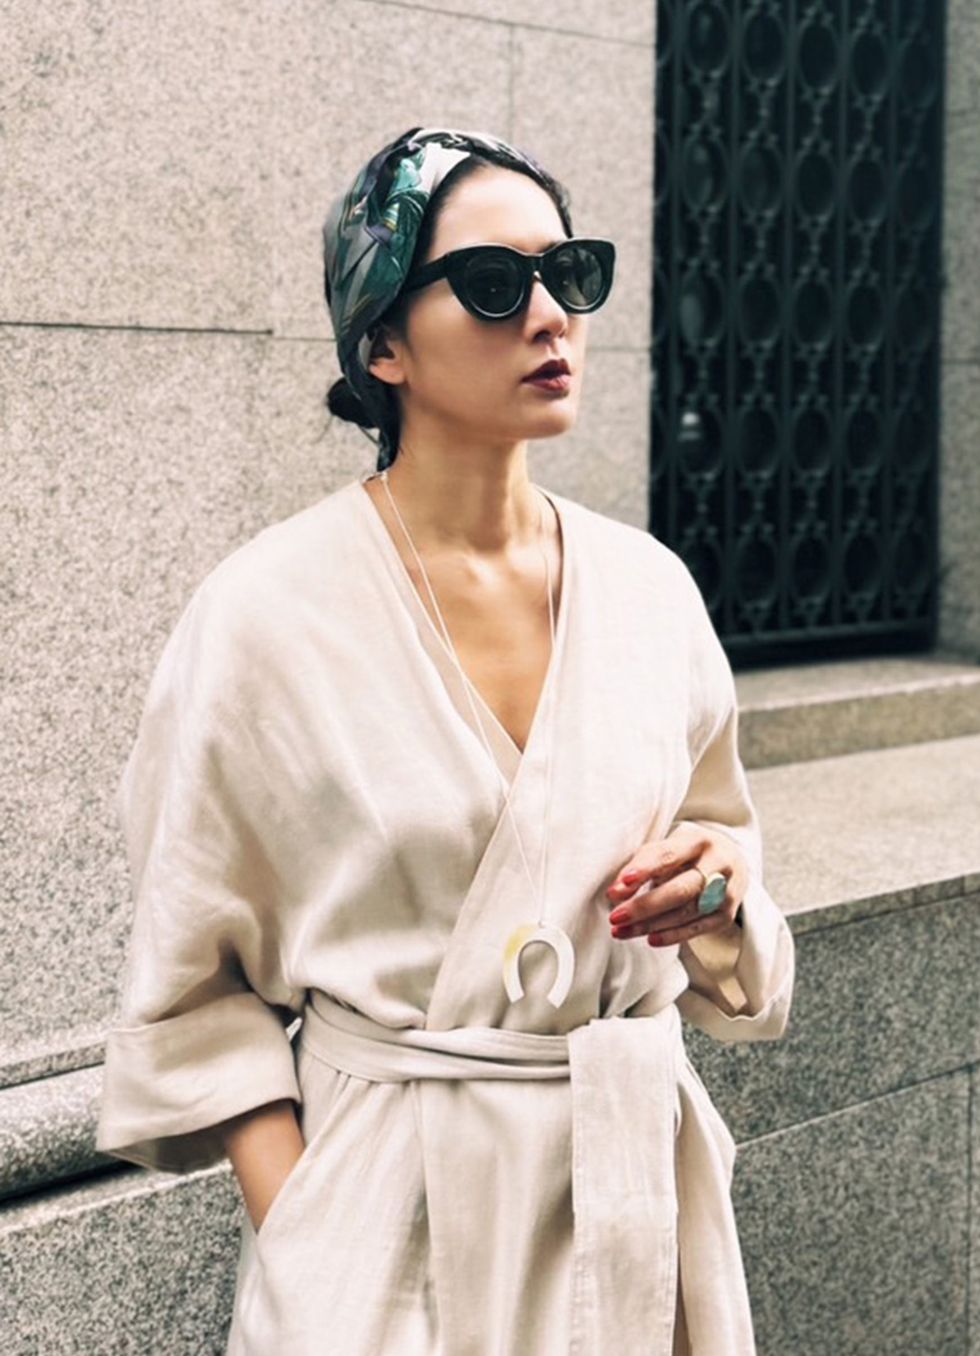 a woman wearing a white dress and sunglasses